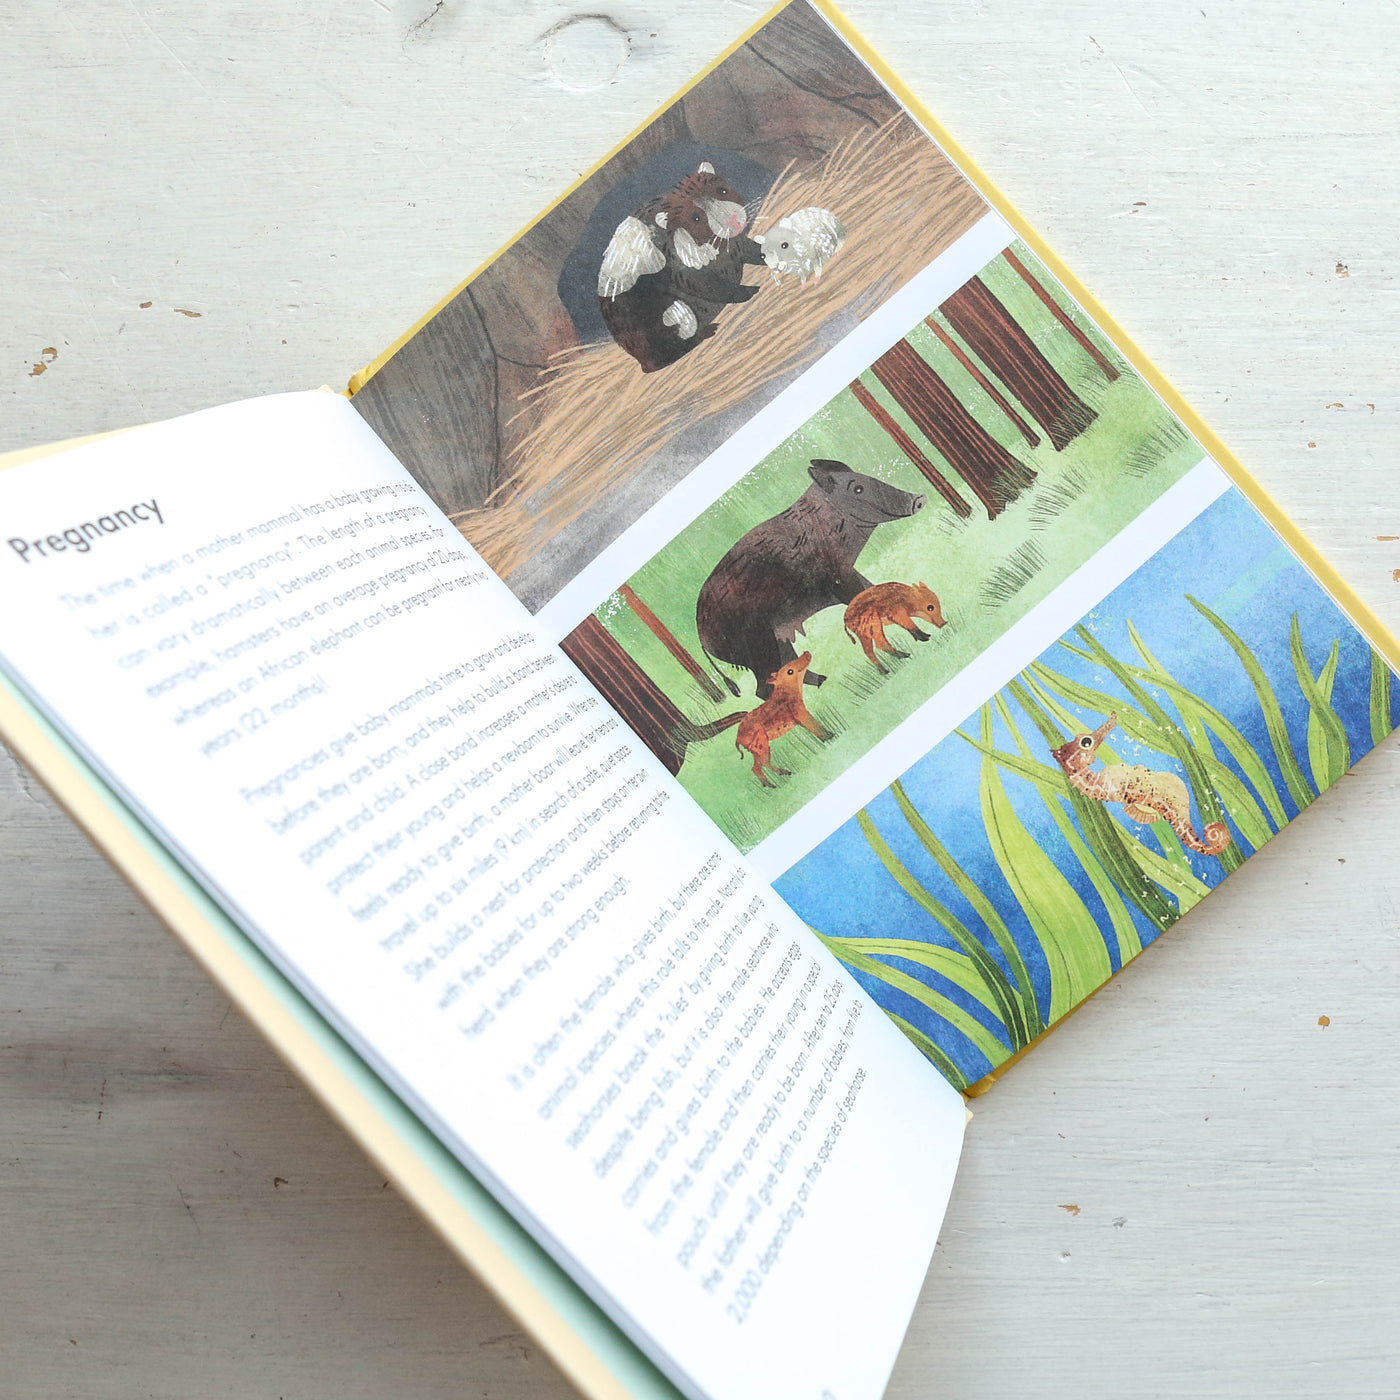 Baby Animals - A Ladybird Book